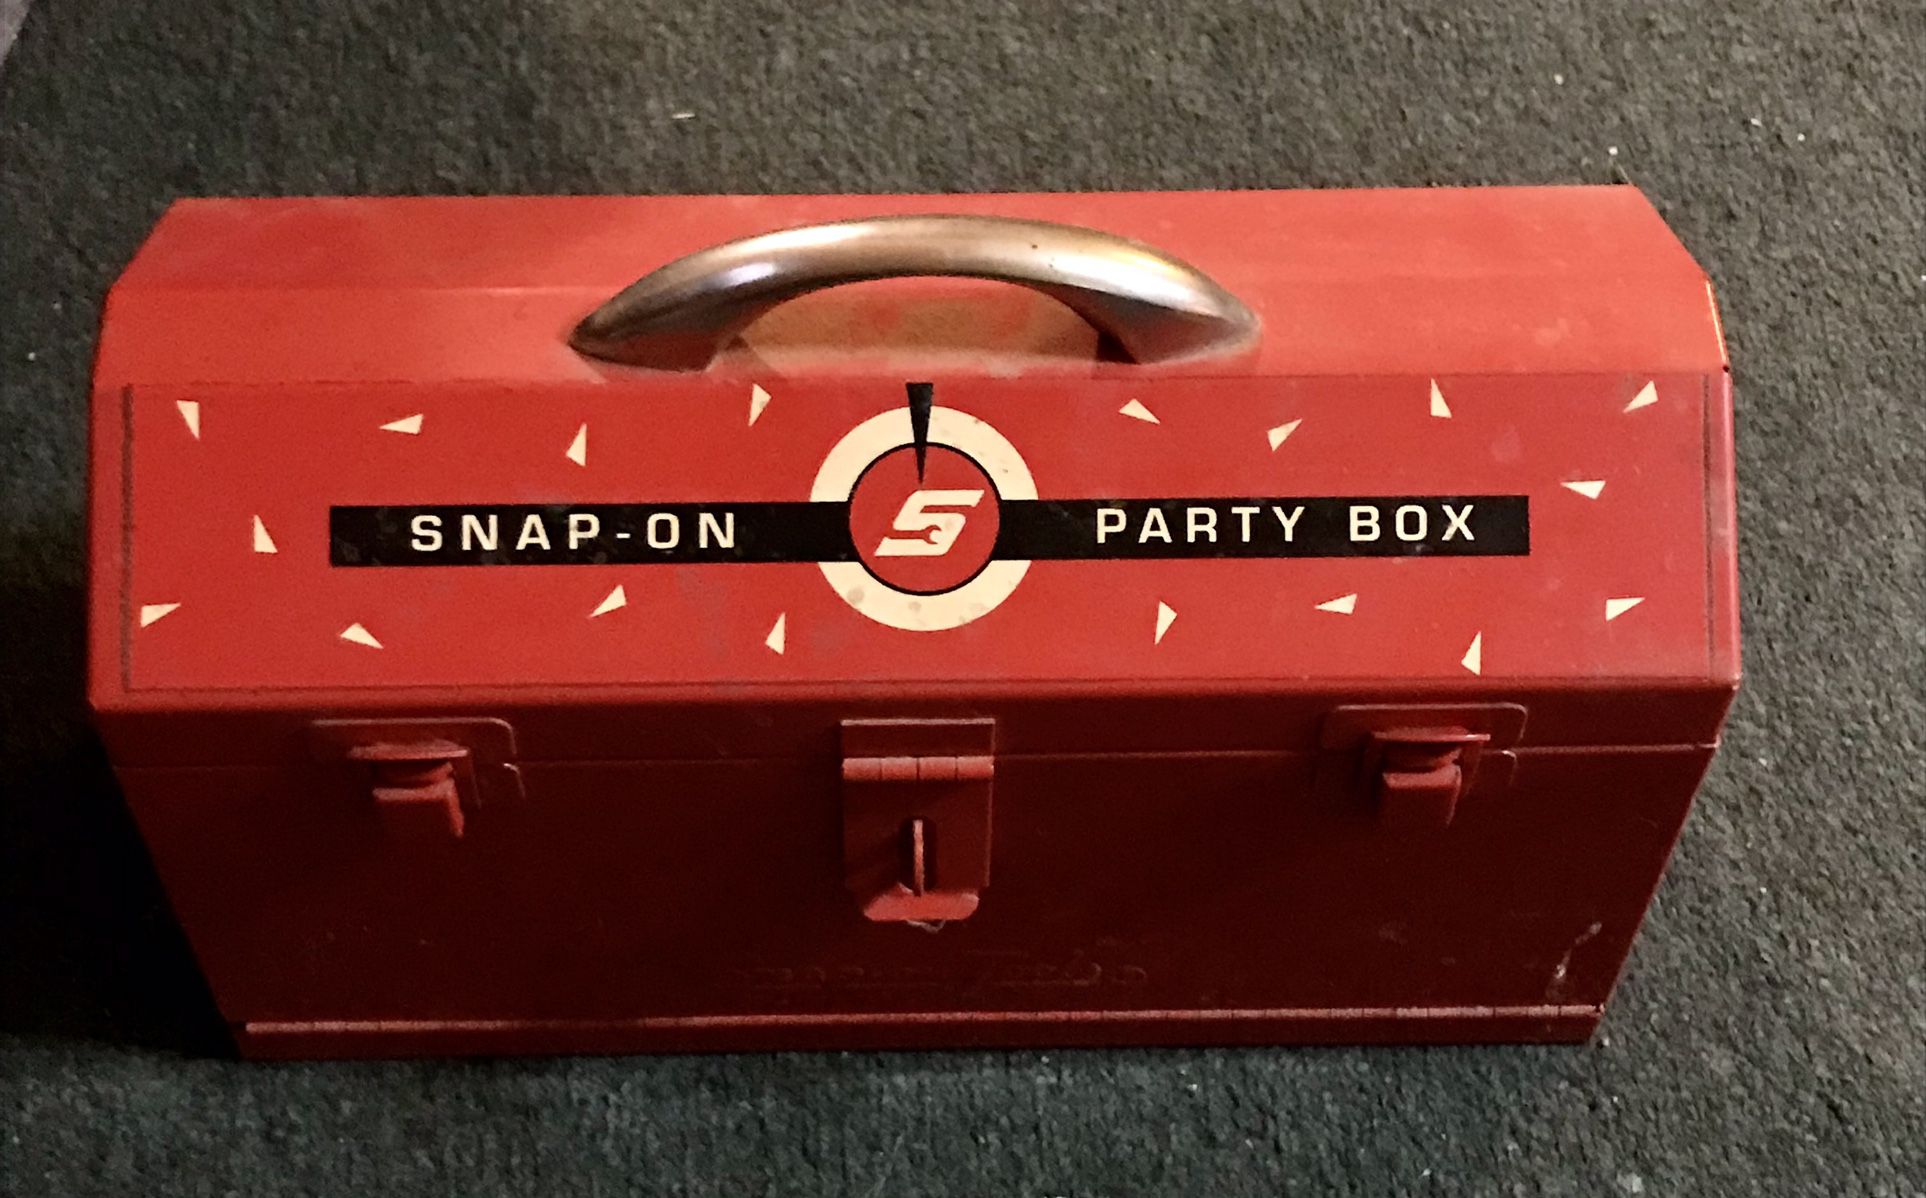 Snap-on Party Box Poker Chip Set